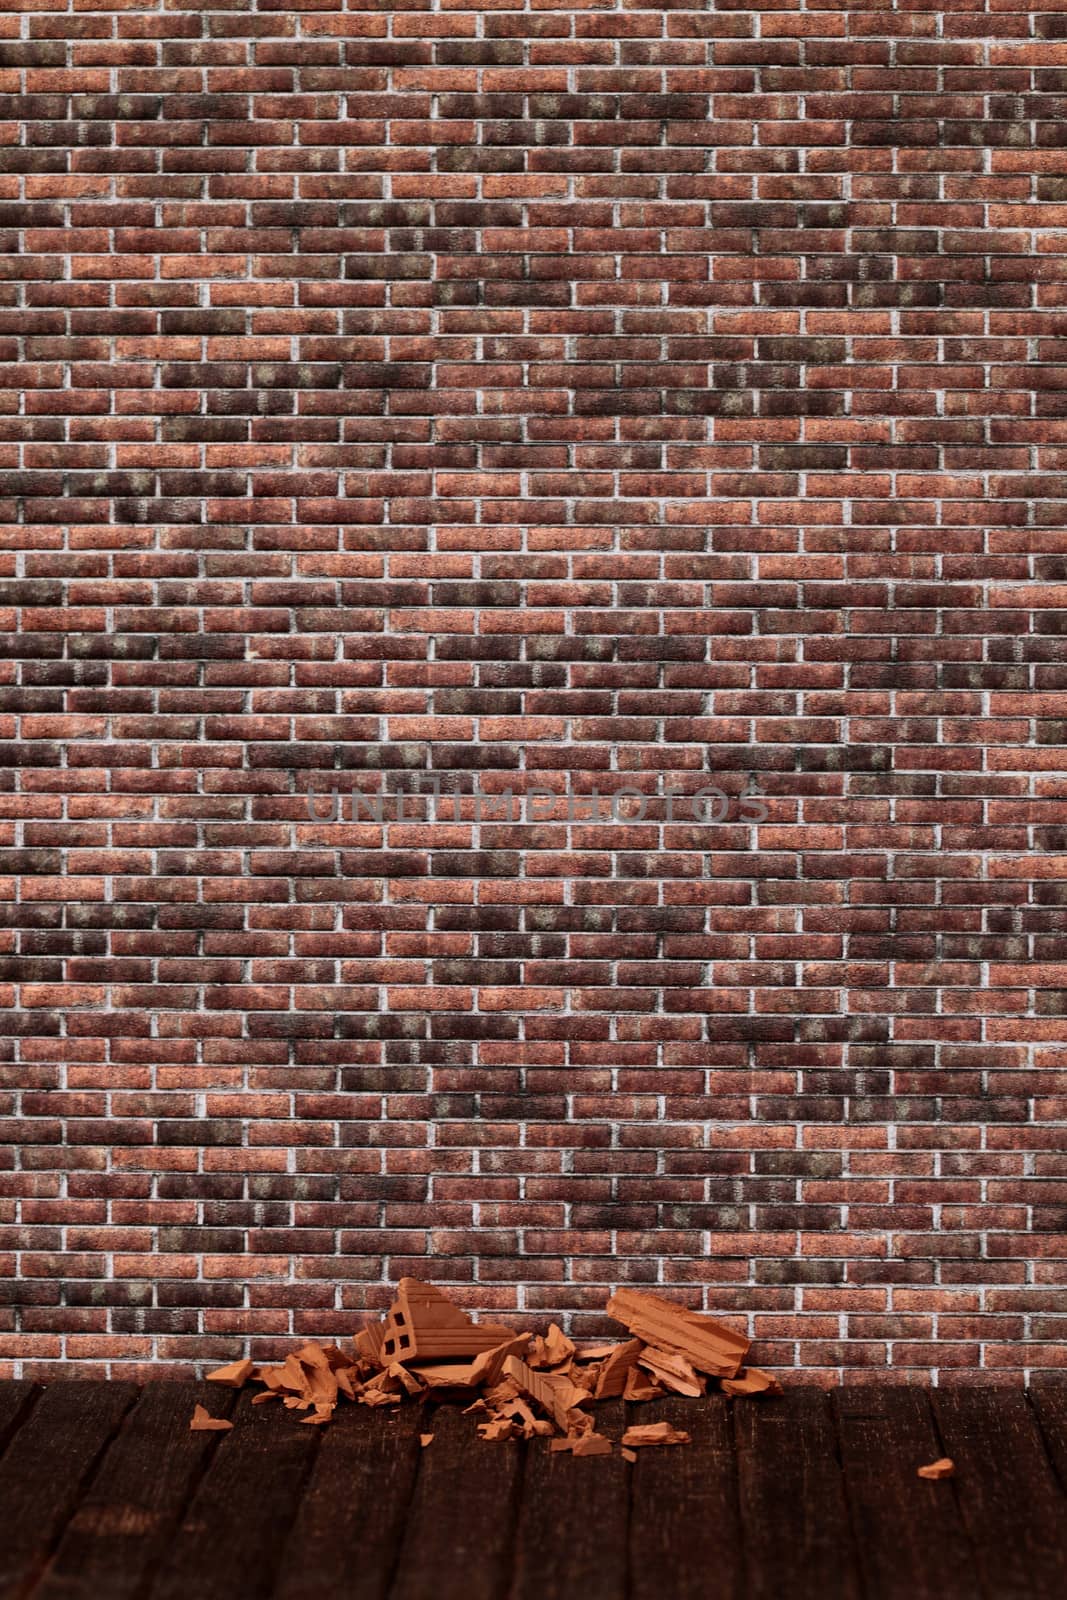 an old brick wall and some broken bricks